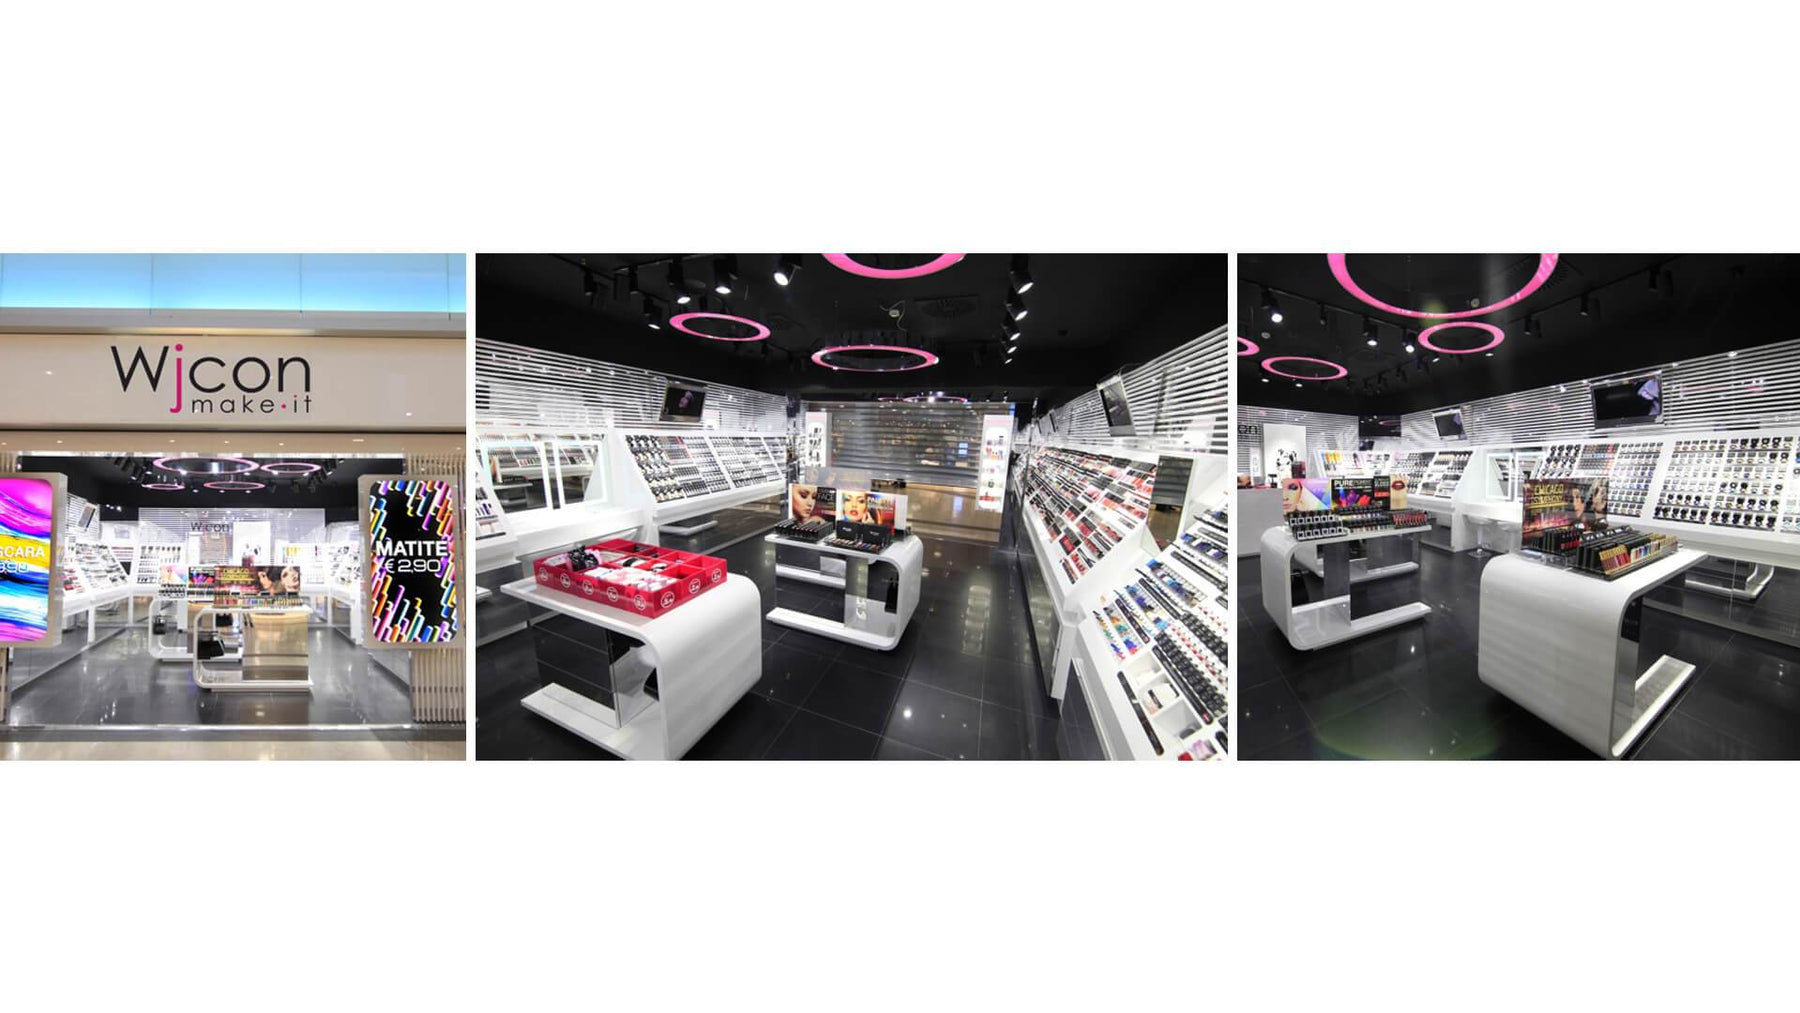 Hot sale Wjcon cosmetics store design in Italy - M2 Retail